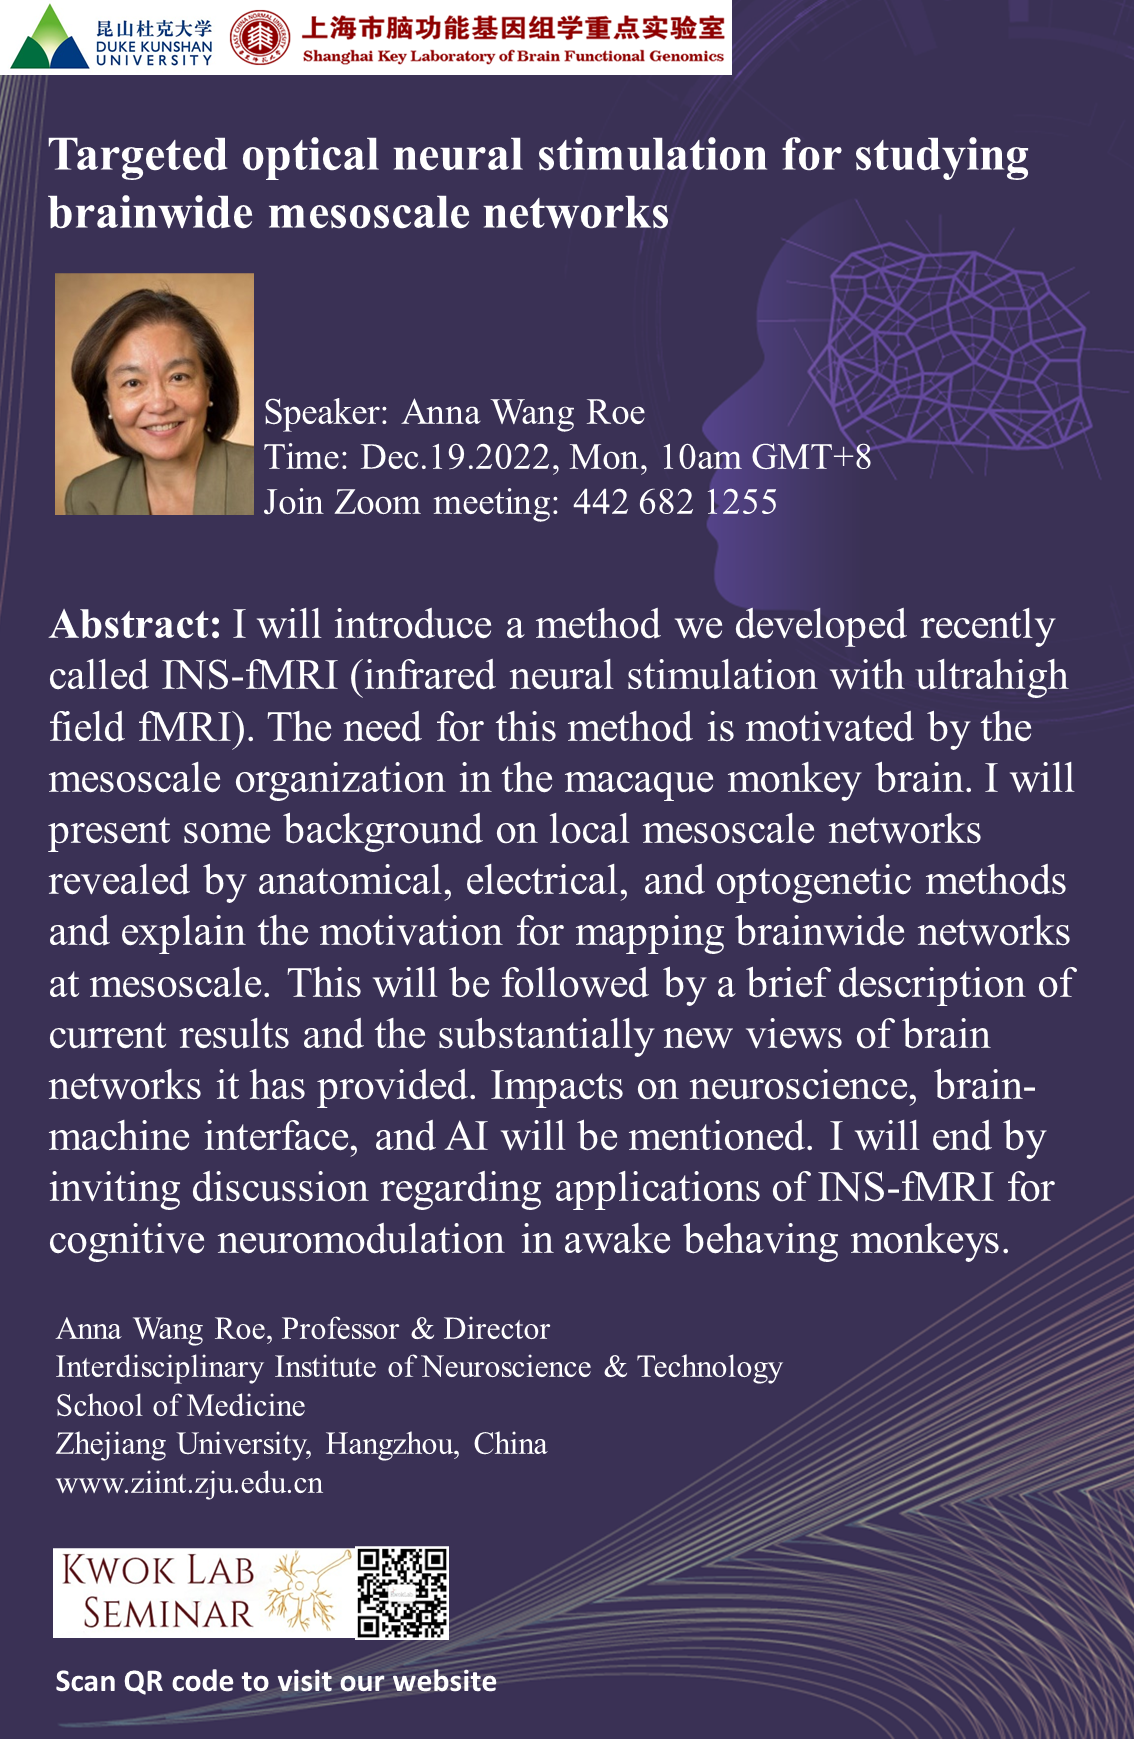 Guest Speaker Seminar : Dr Anna Wang Roe